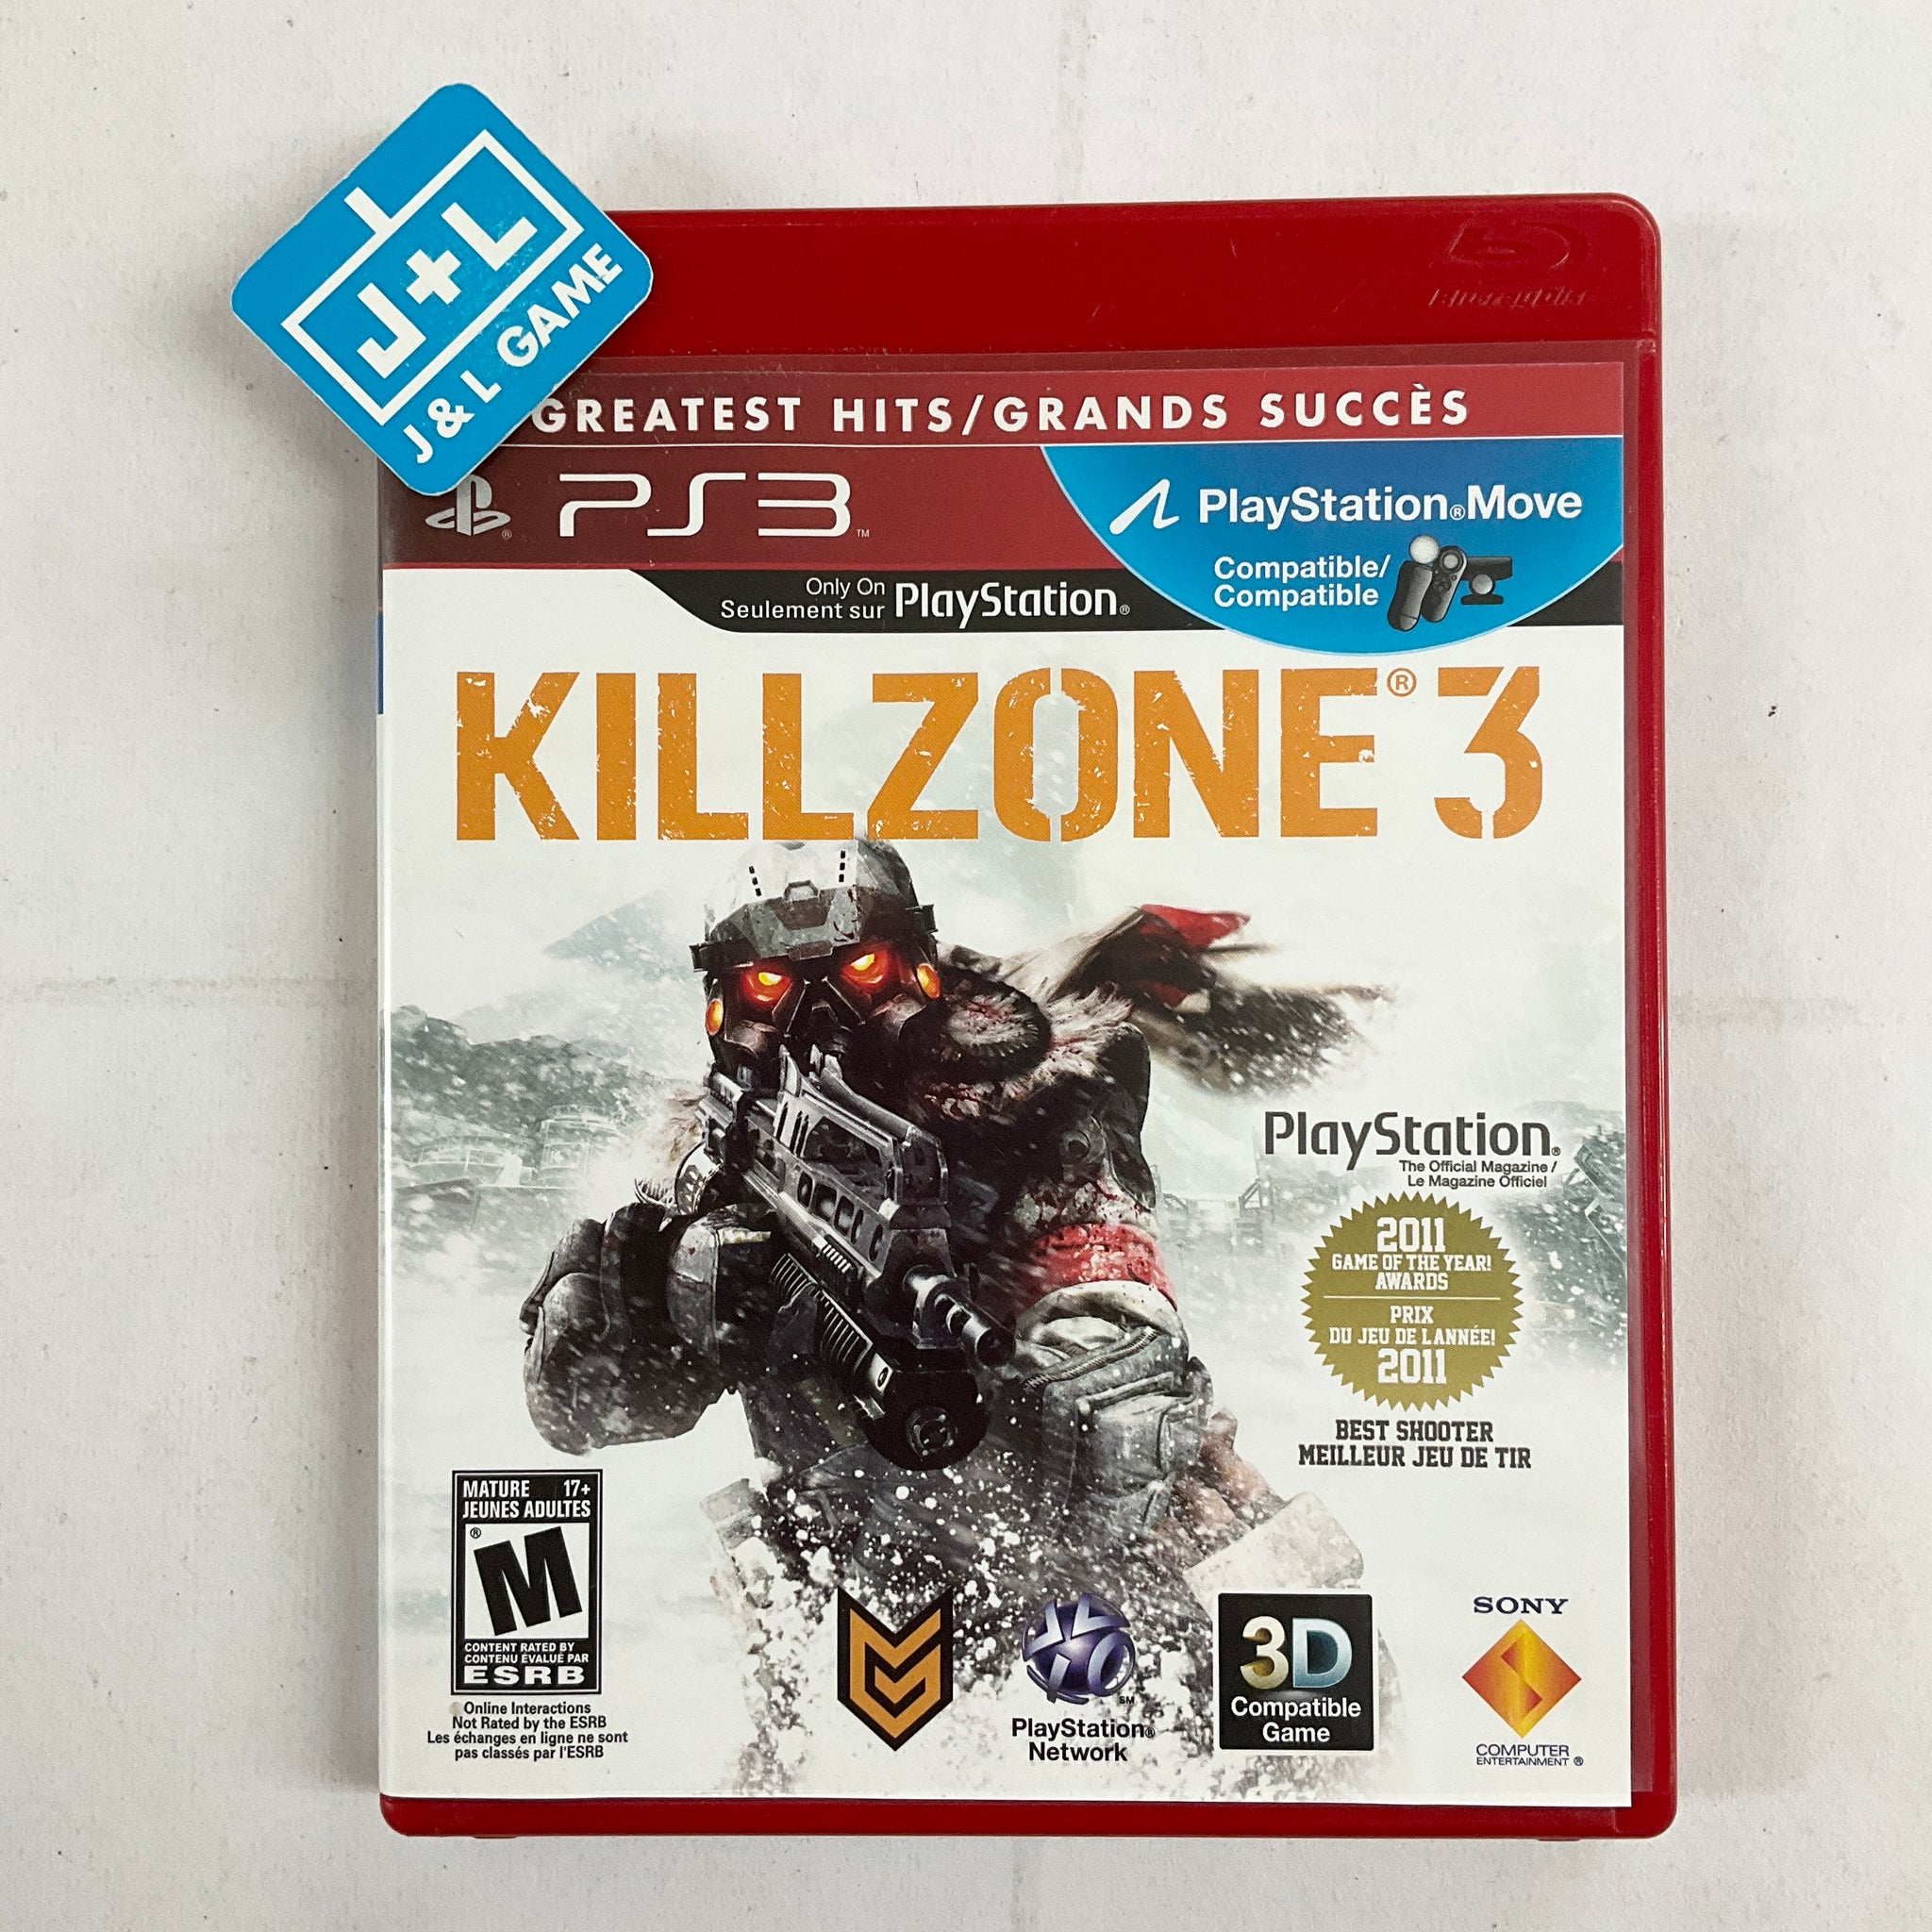 Killzone 3 Playstation 3 Game